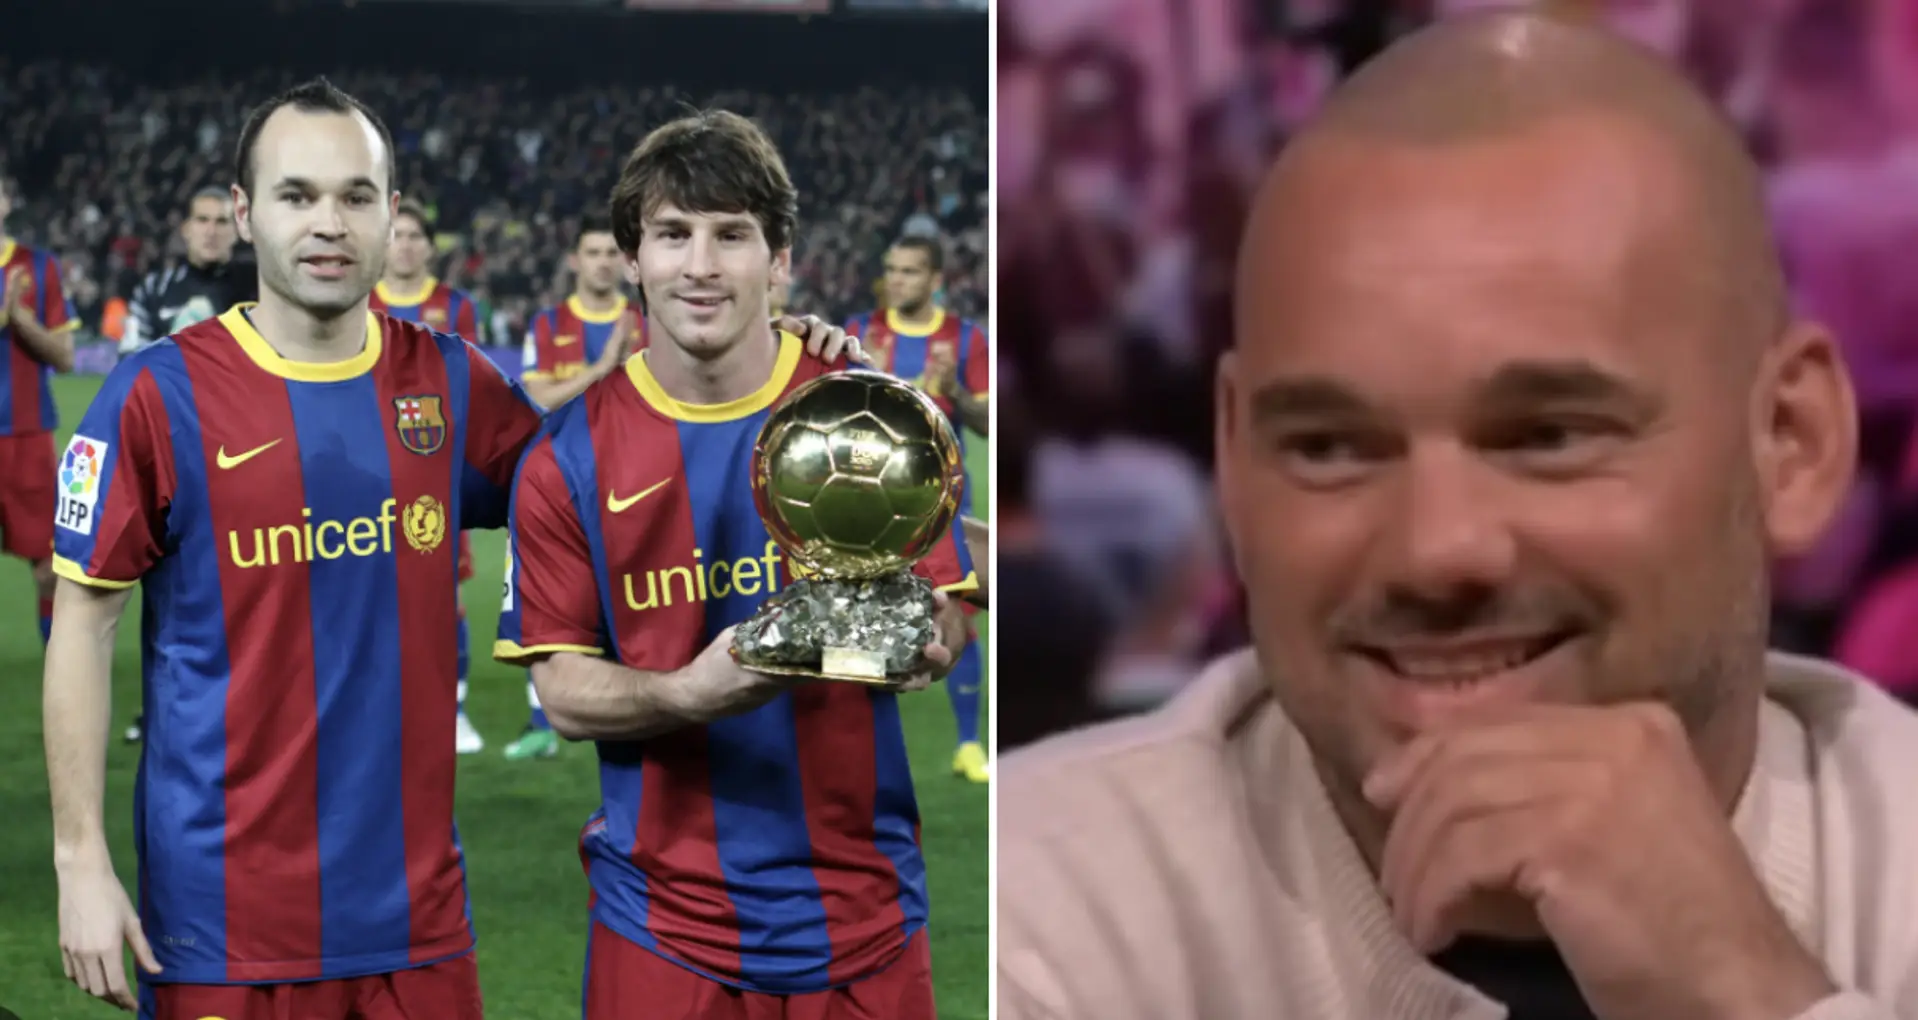 'It was unfair': Wesley Sneijder reveals true feelings about Leo Messi's Ballon d'Or win in 2010